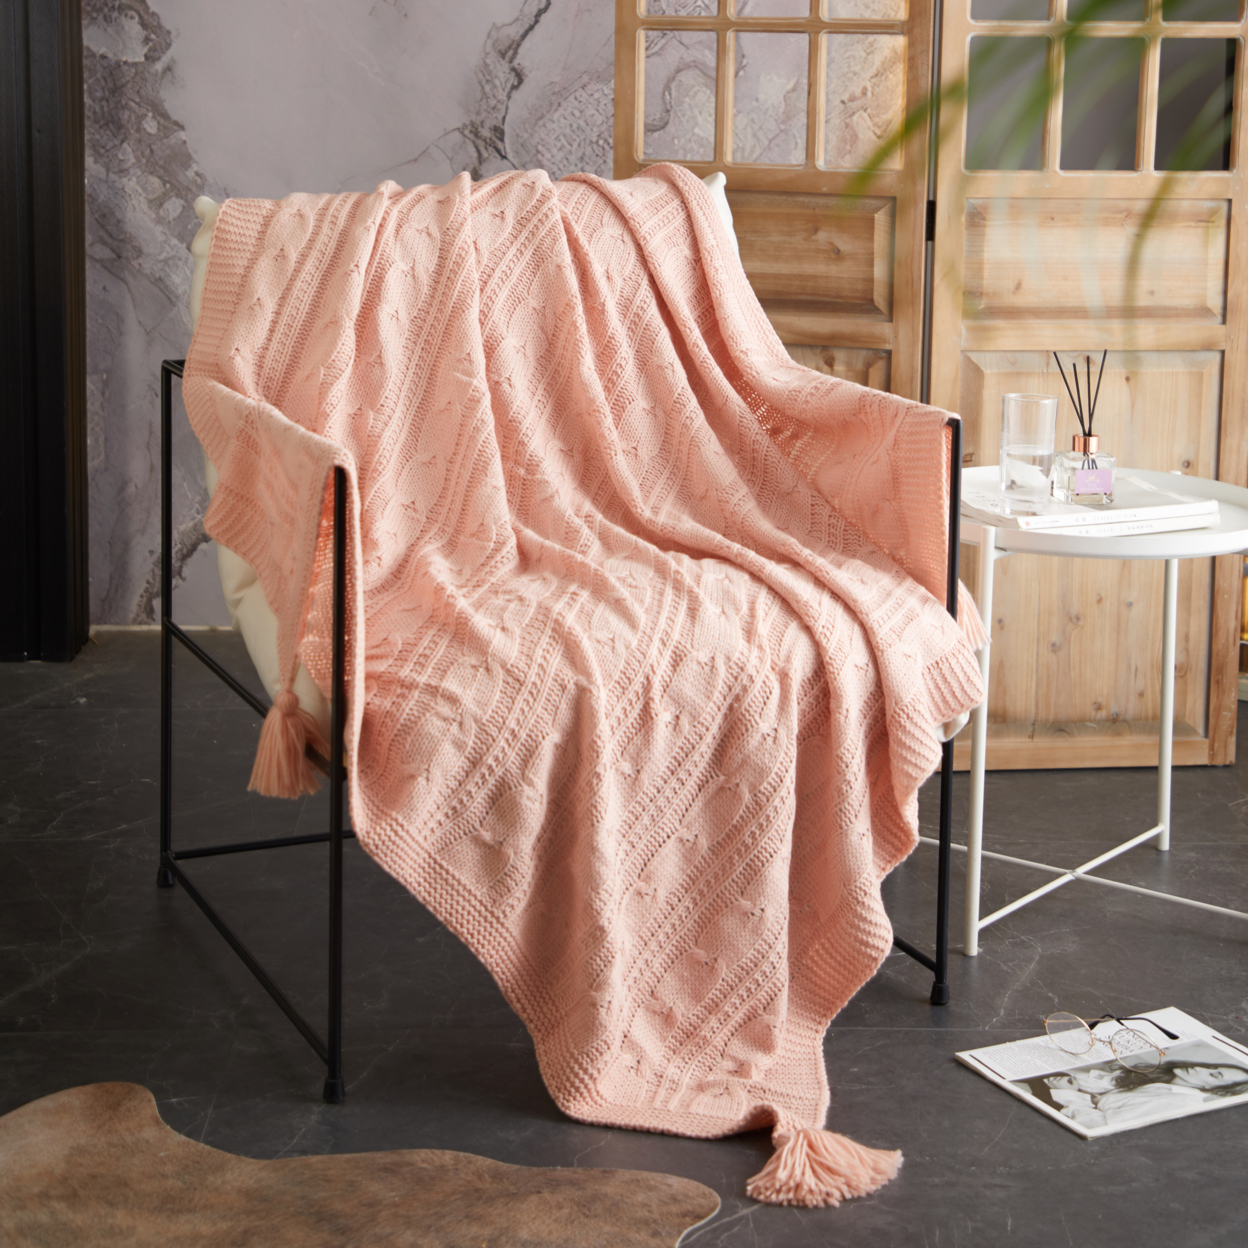 NY&C Home Dorja Knitted Throw Blanket Plush Super Soft Textured Pattern - Blush